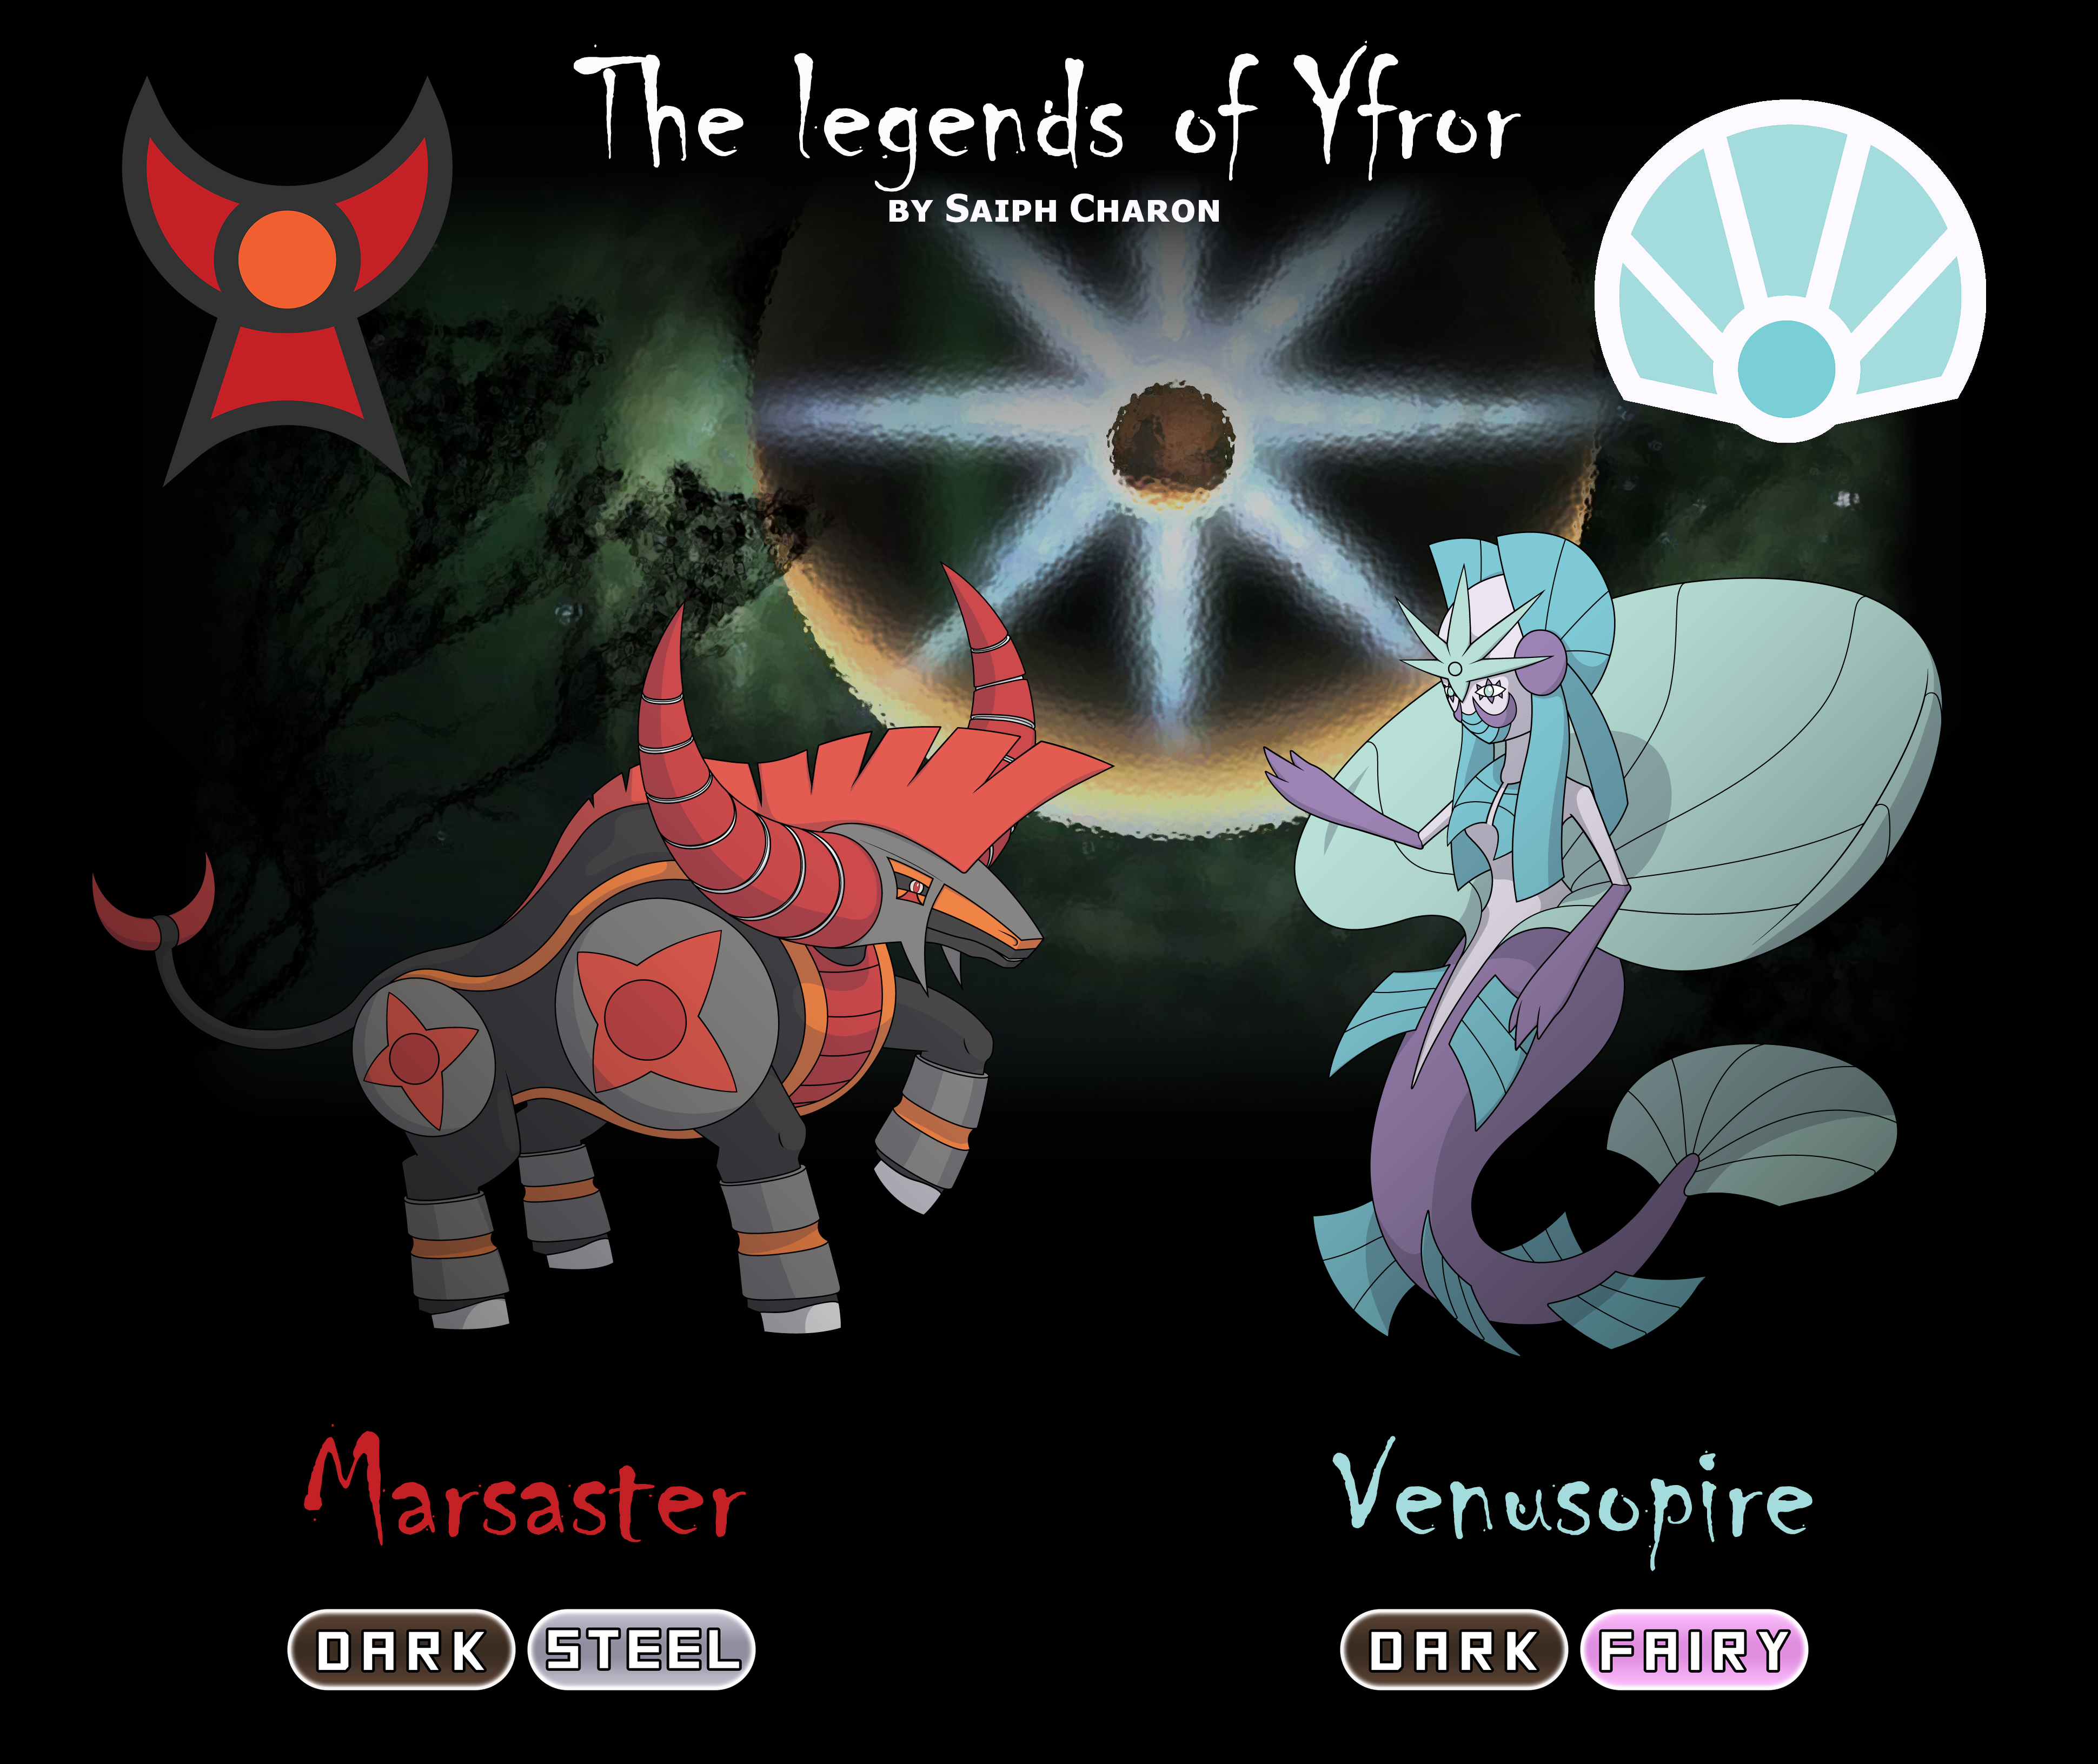 yfror_legends___marsaster_and_venusopire_by_saiph_charon-dblqyn4.png